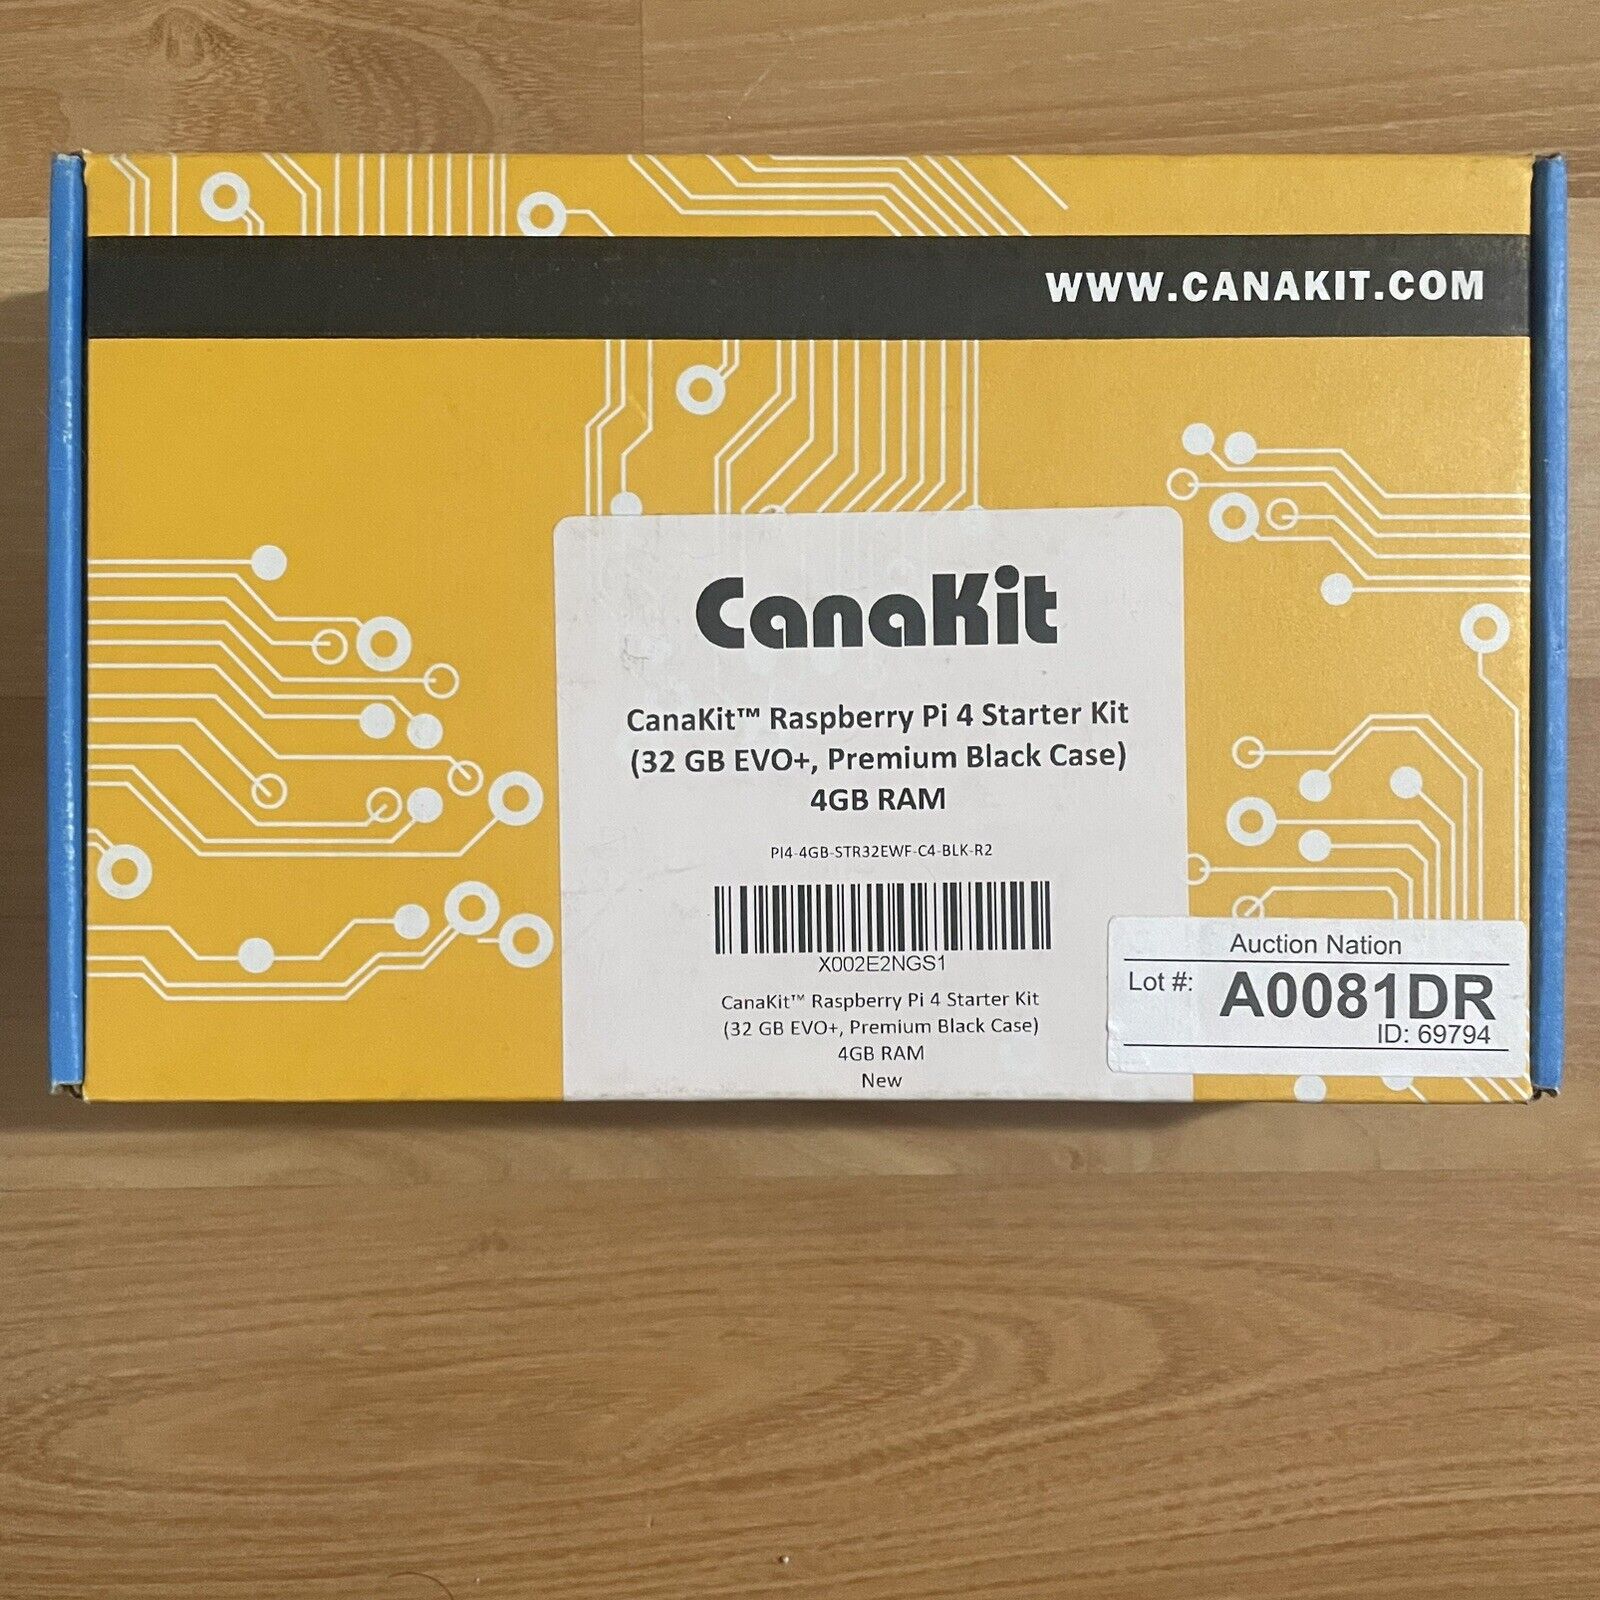 Canakit Raspberry Pi4 Starter Kit (32GB EVO+ Premium Black Case) 4GB Ram SEALED